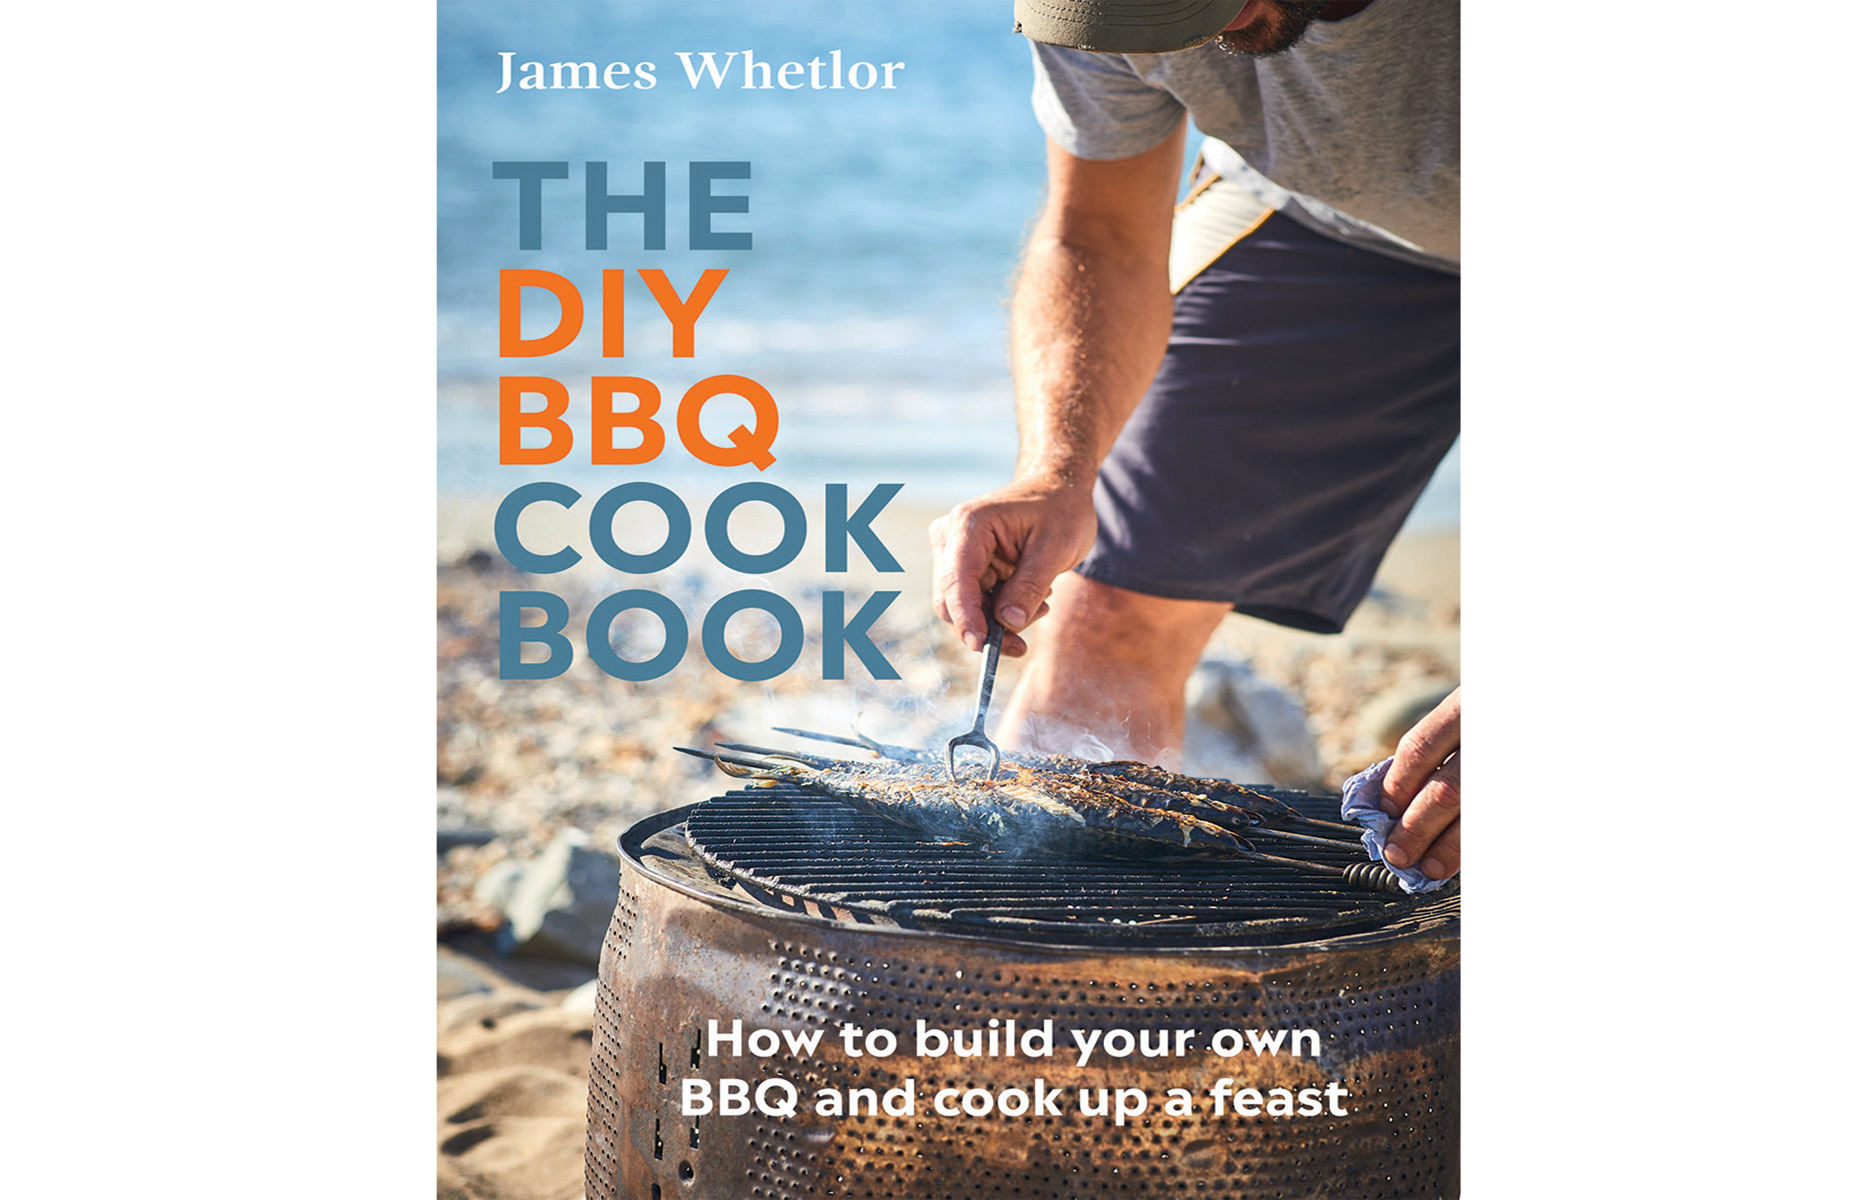  The DIY BBQ Cookbook by James Whetlor